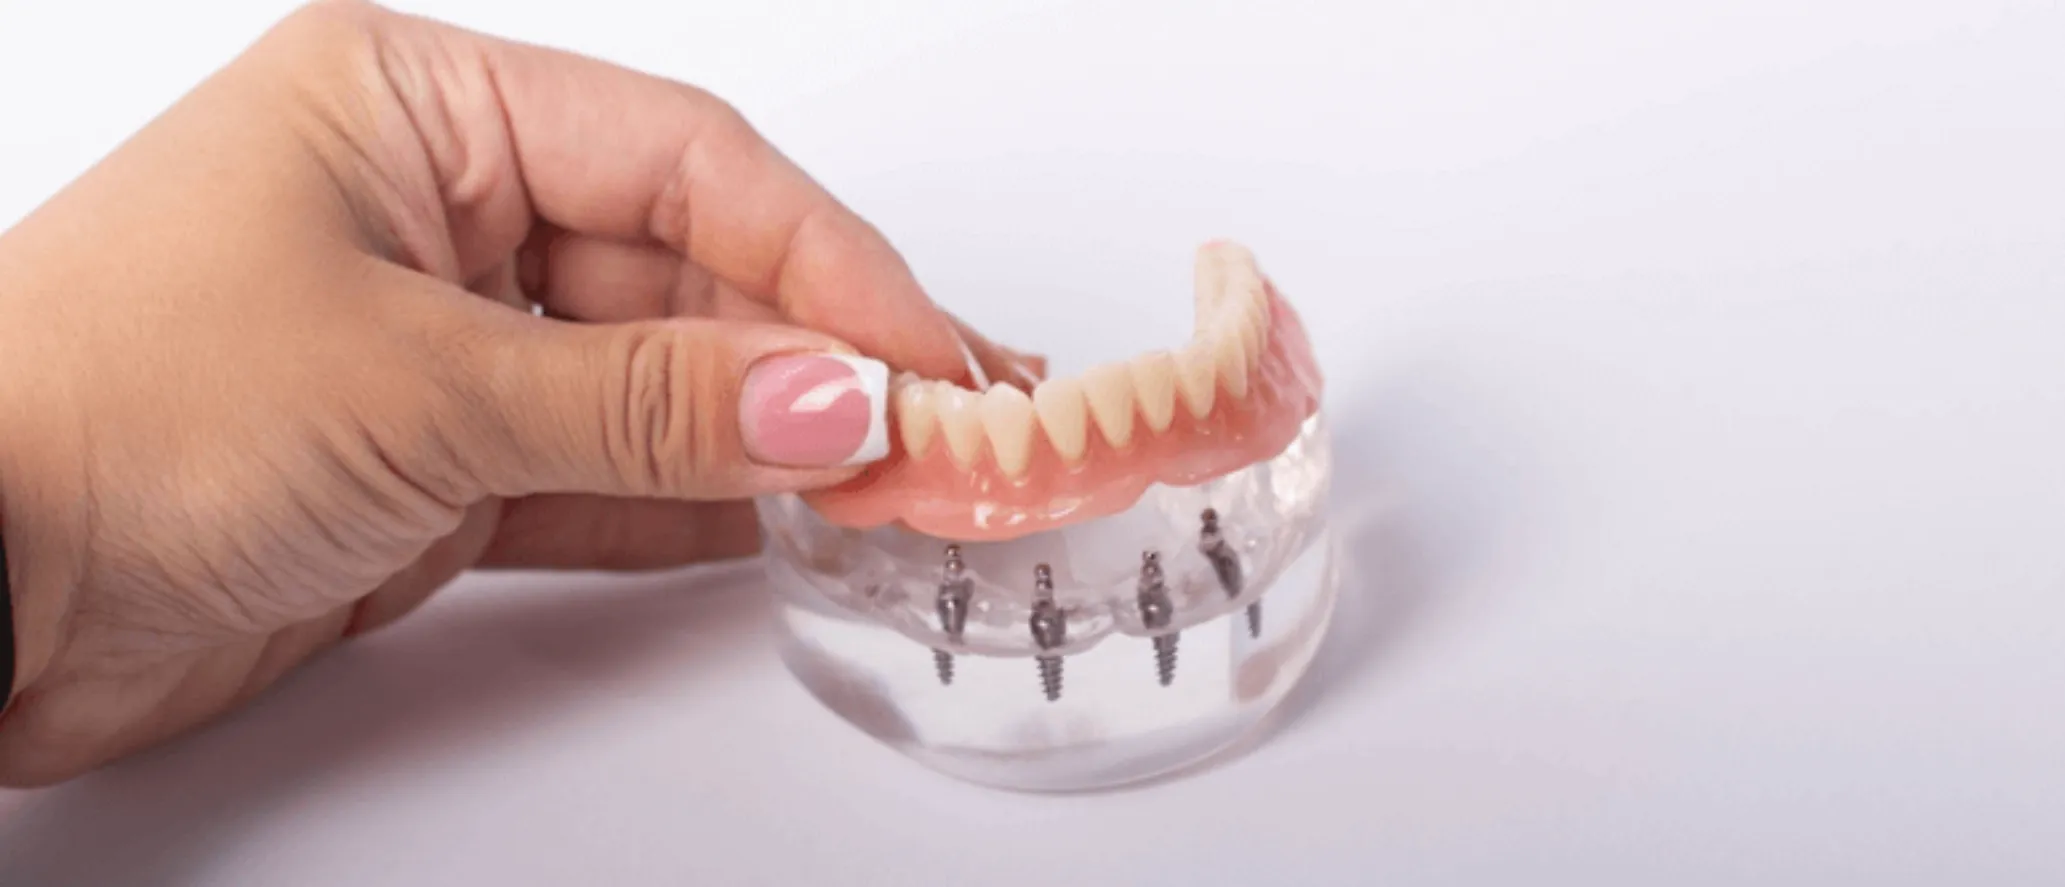 All-On-4 Dental Implants Maintenance Tips